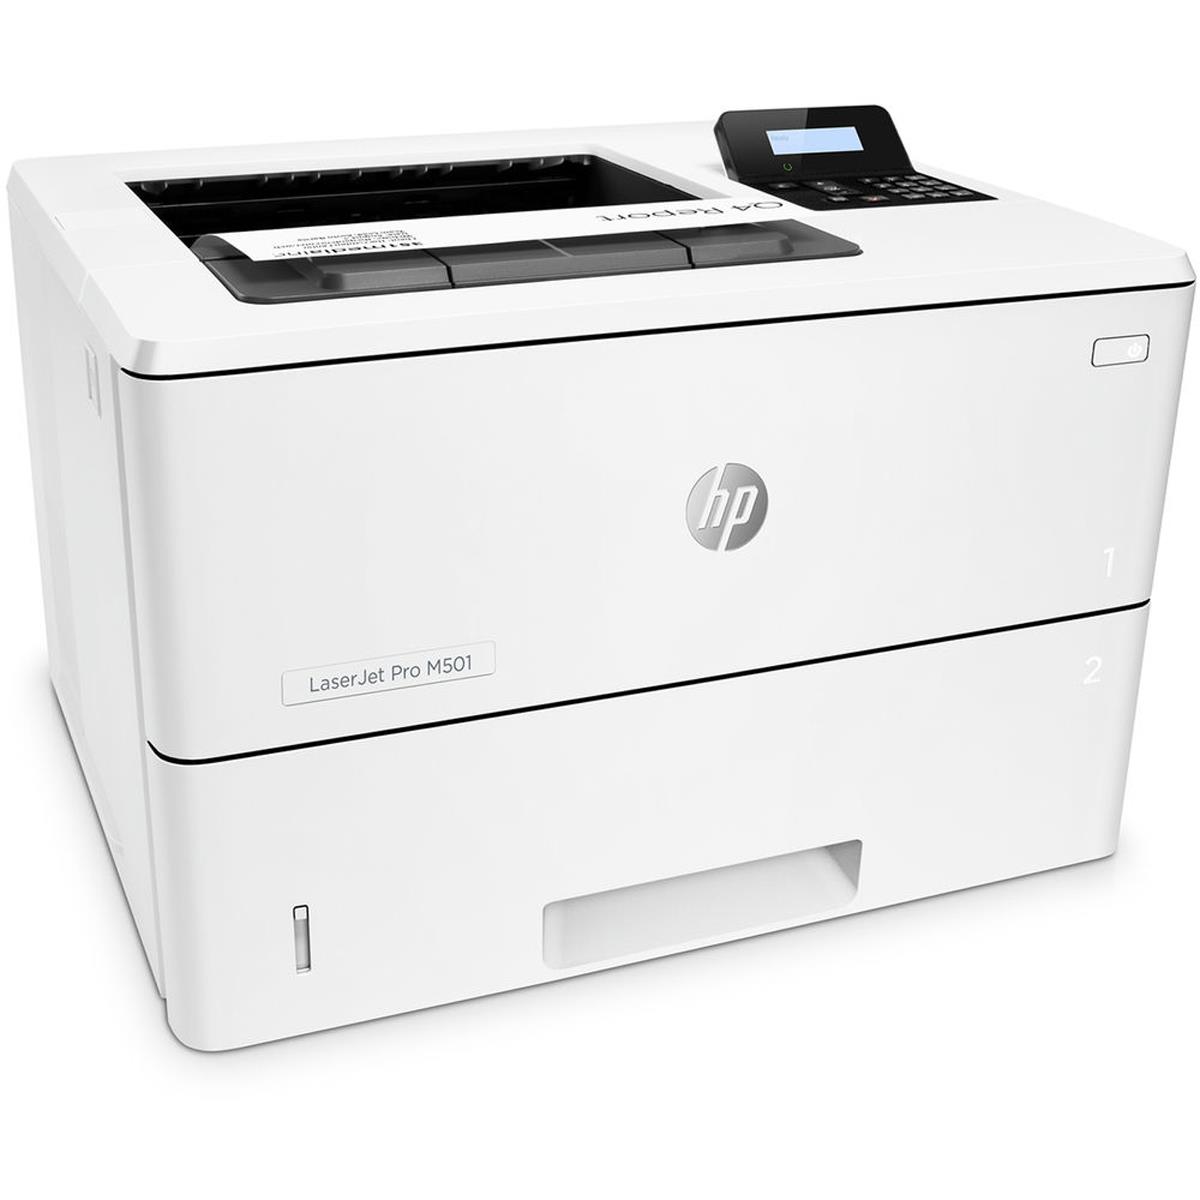 Image of HP LaserJet Pro M501dn Black and White Laser Printer